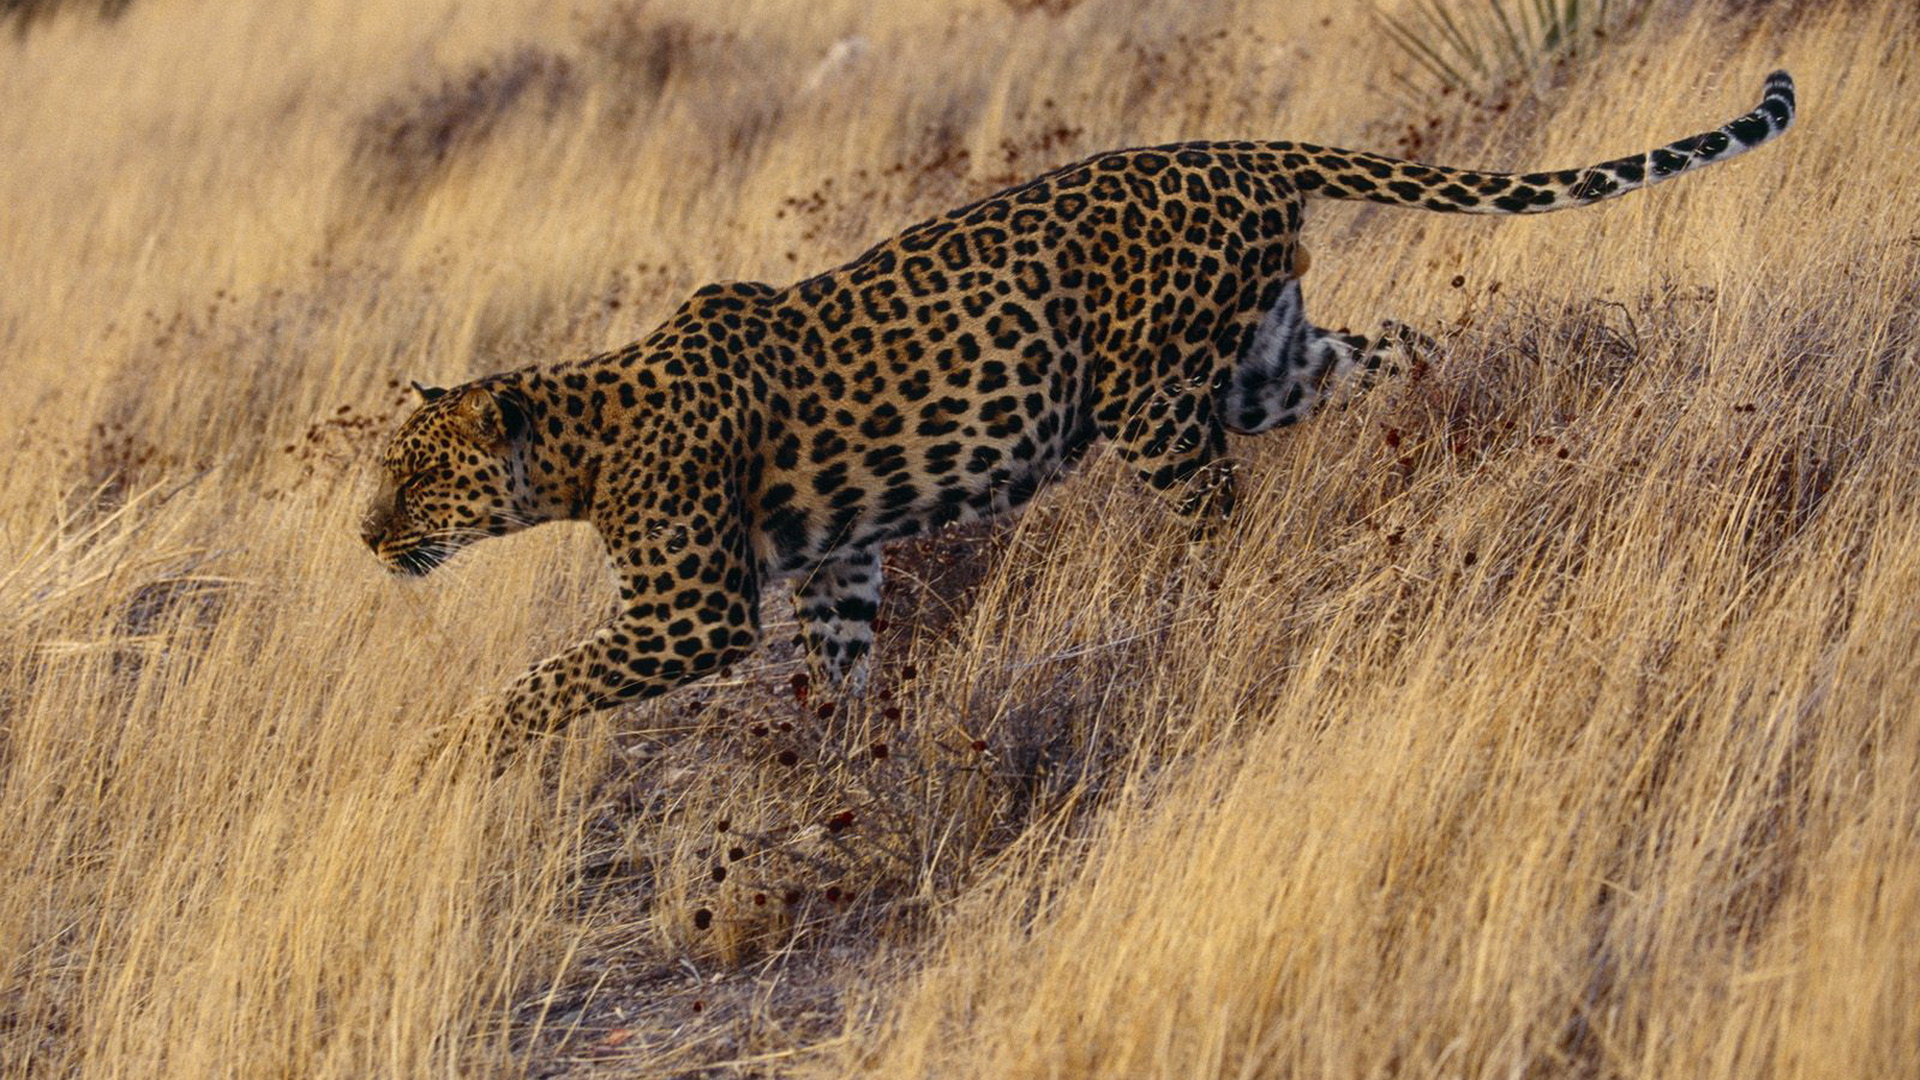 Leopard resting in savannah grass